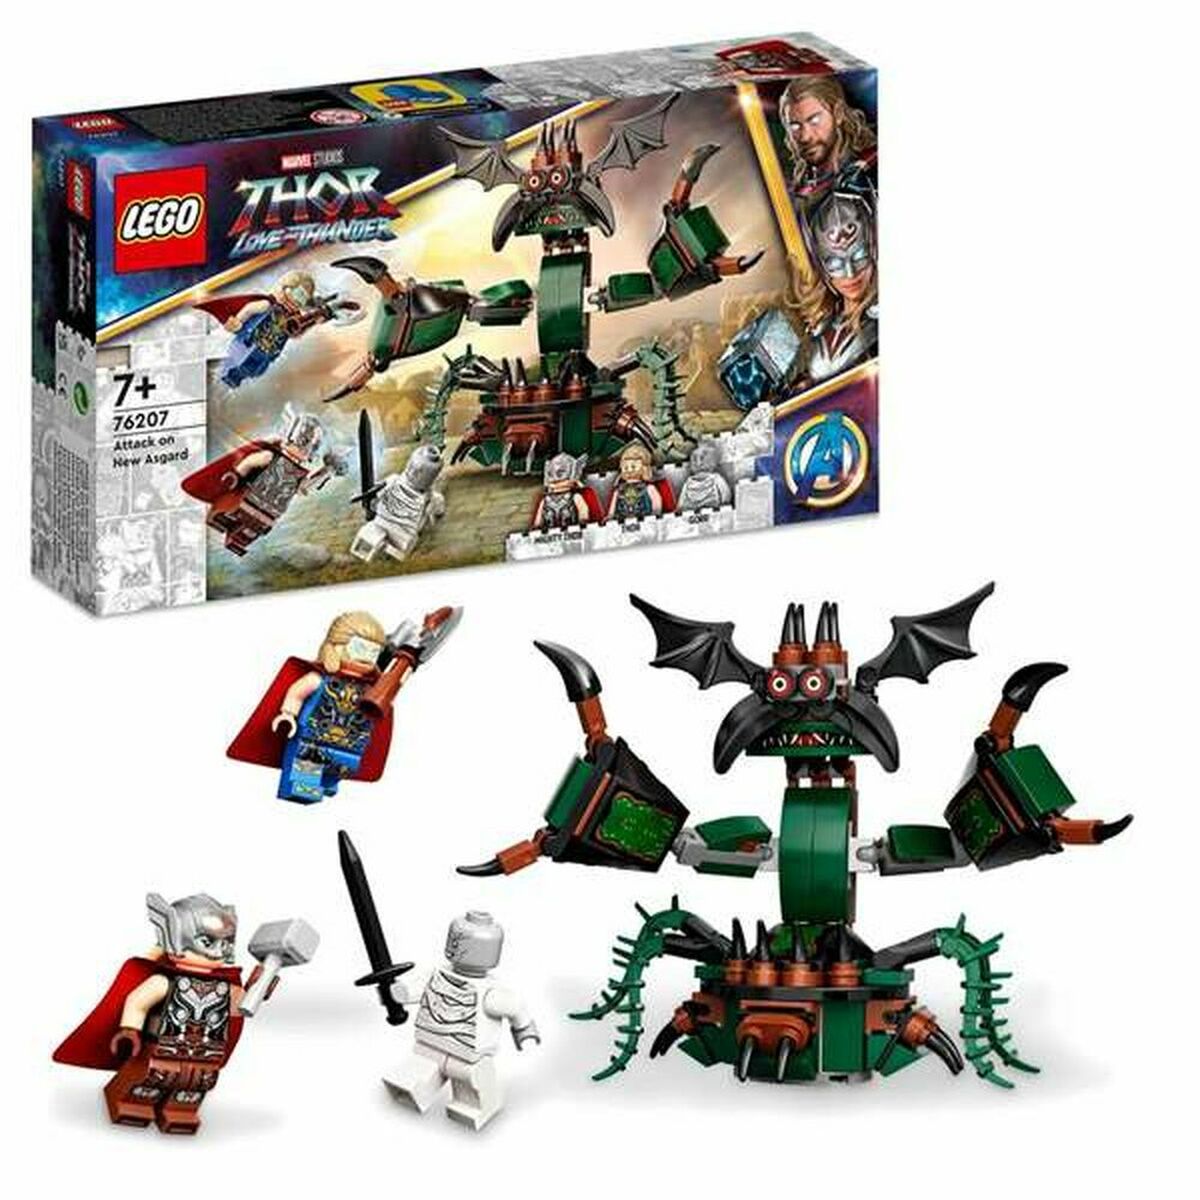 Konstruktion Set Lego Thor Love and Thunder: Attack on New Asgard